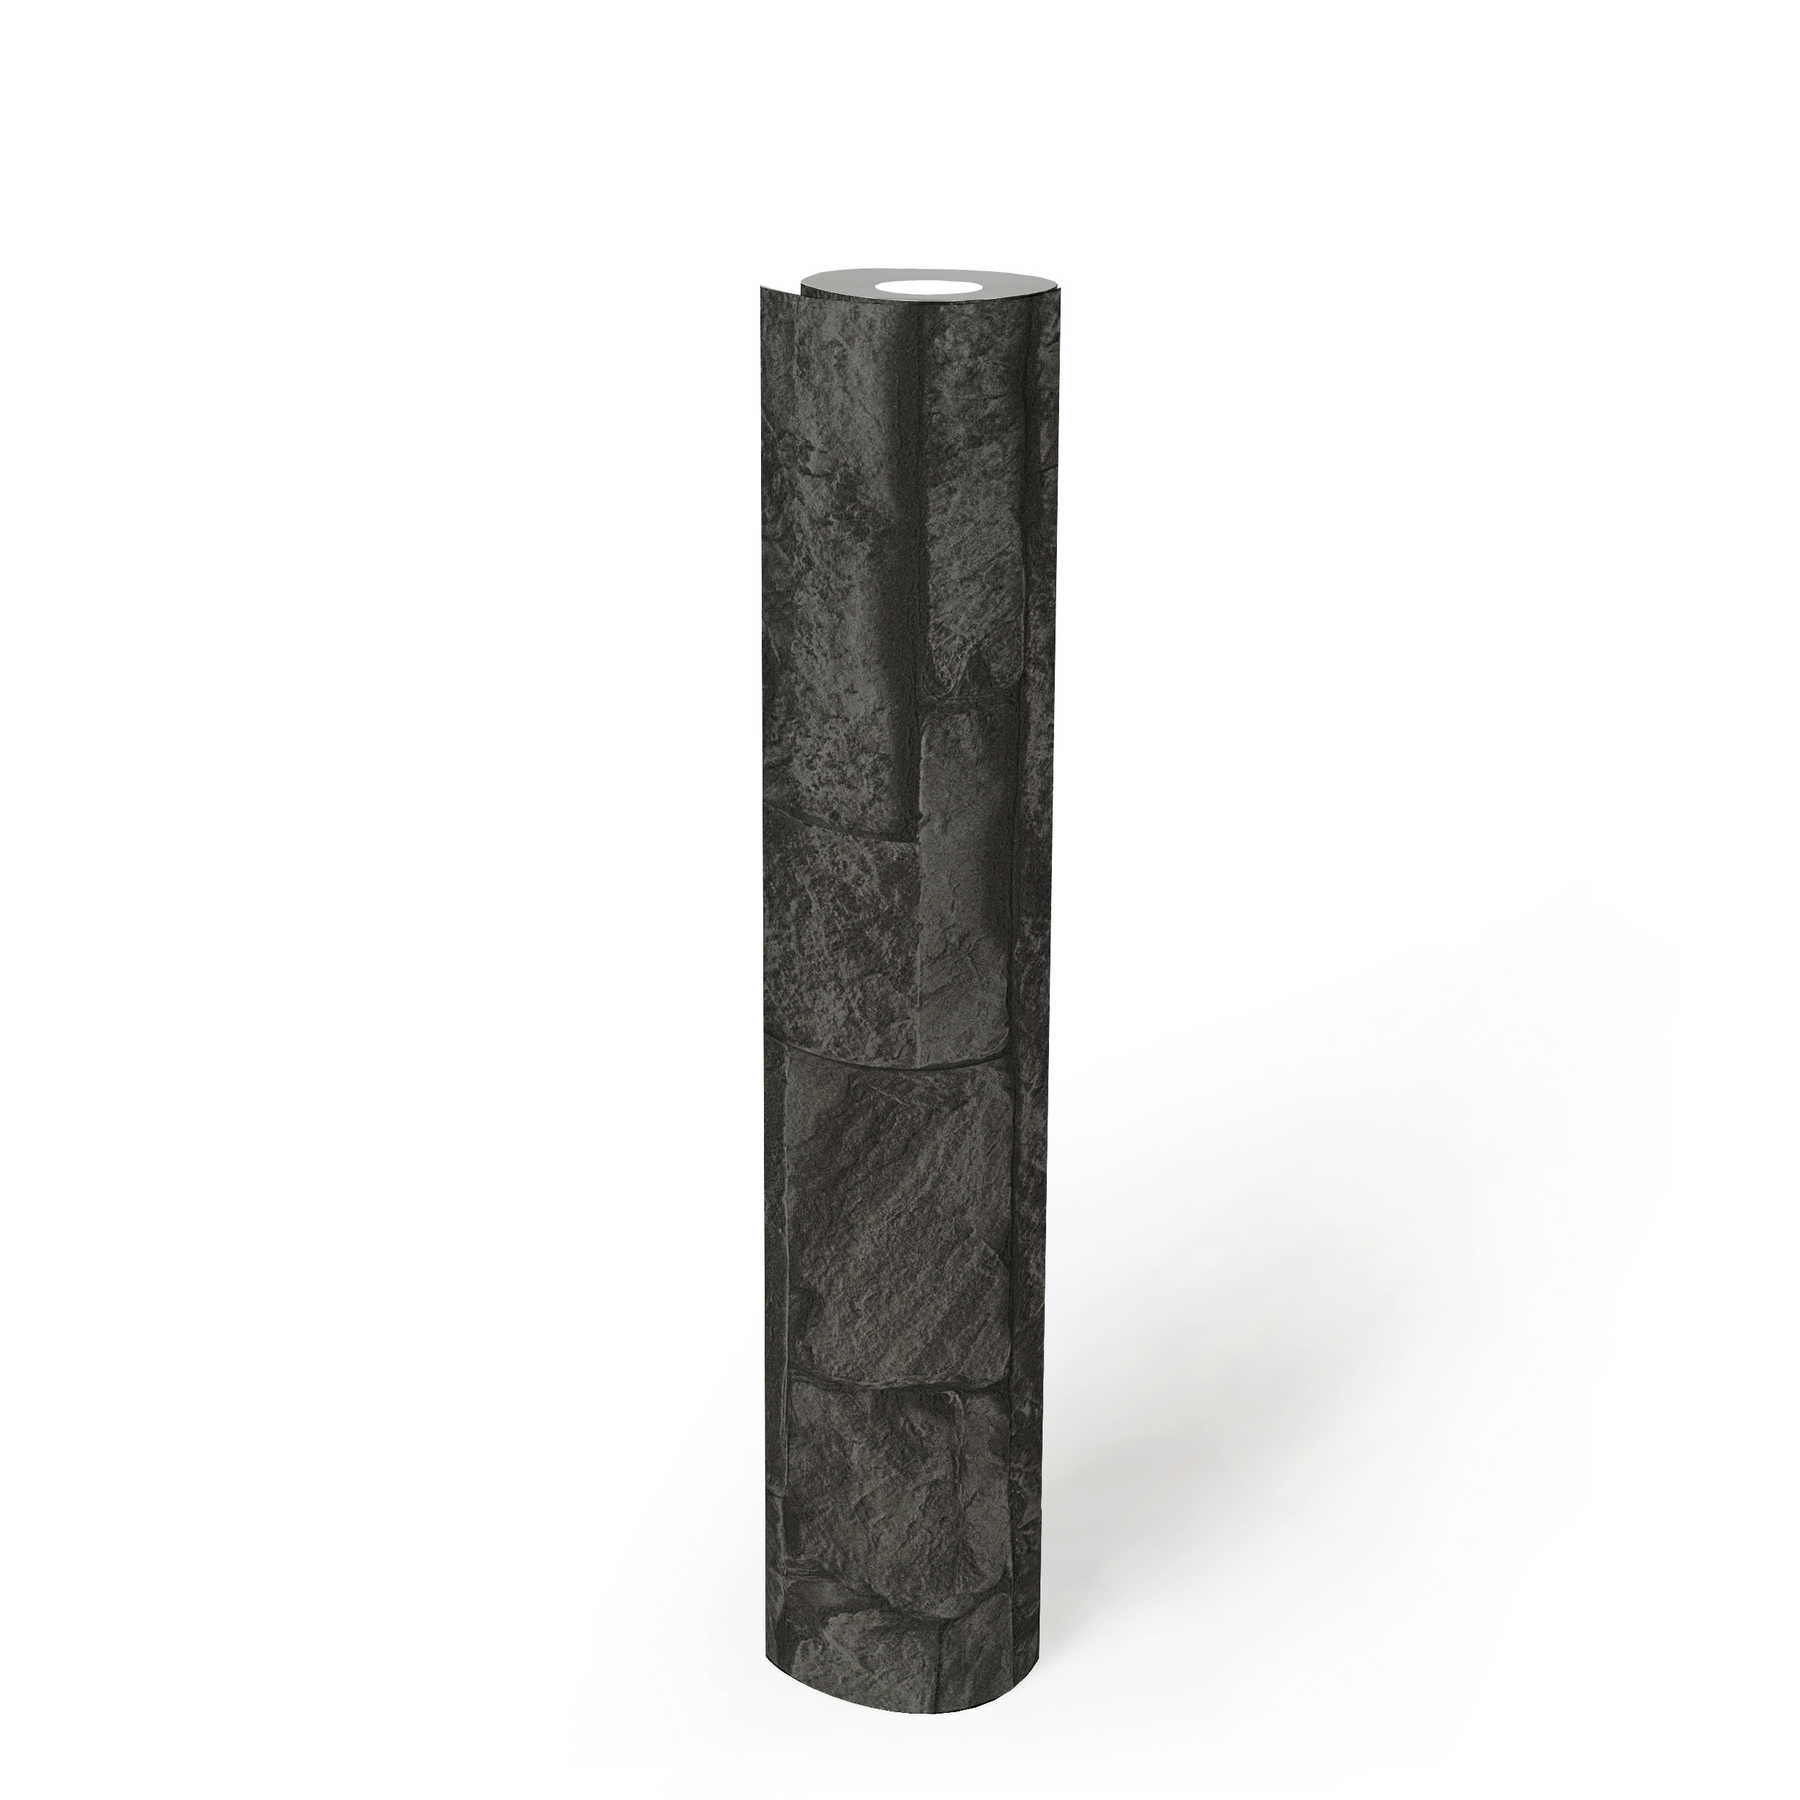             Black stone look wallpaper detailed & realistic - grey, black
        